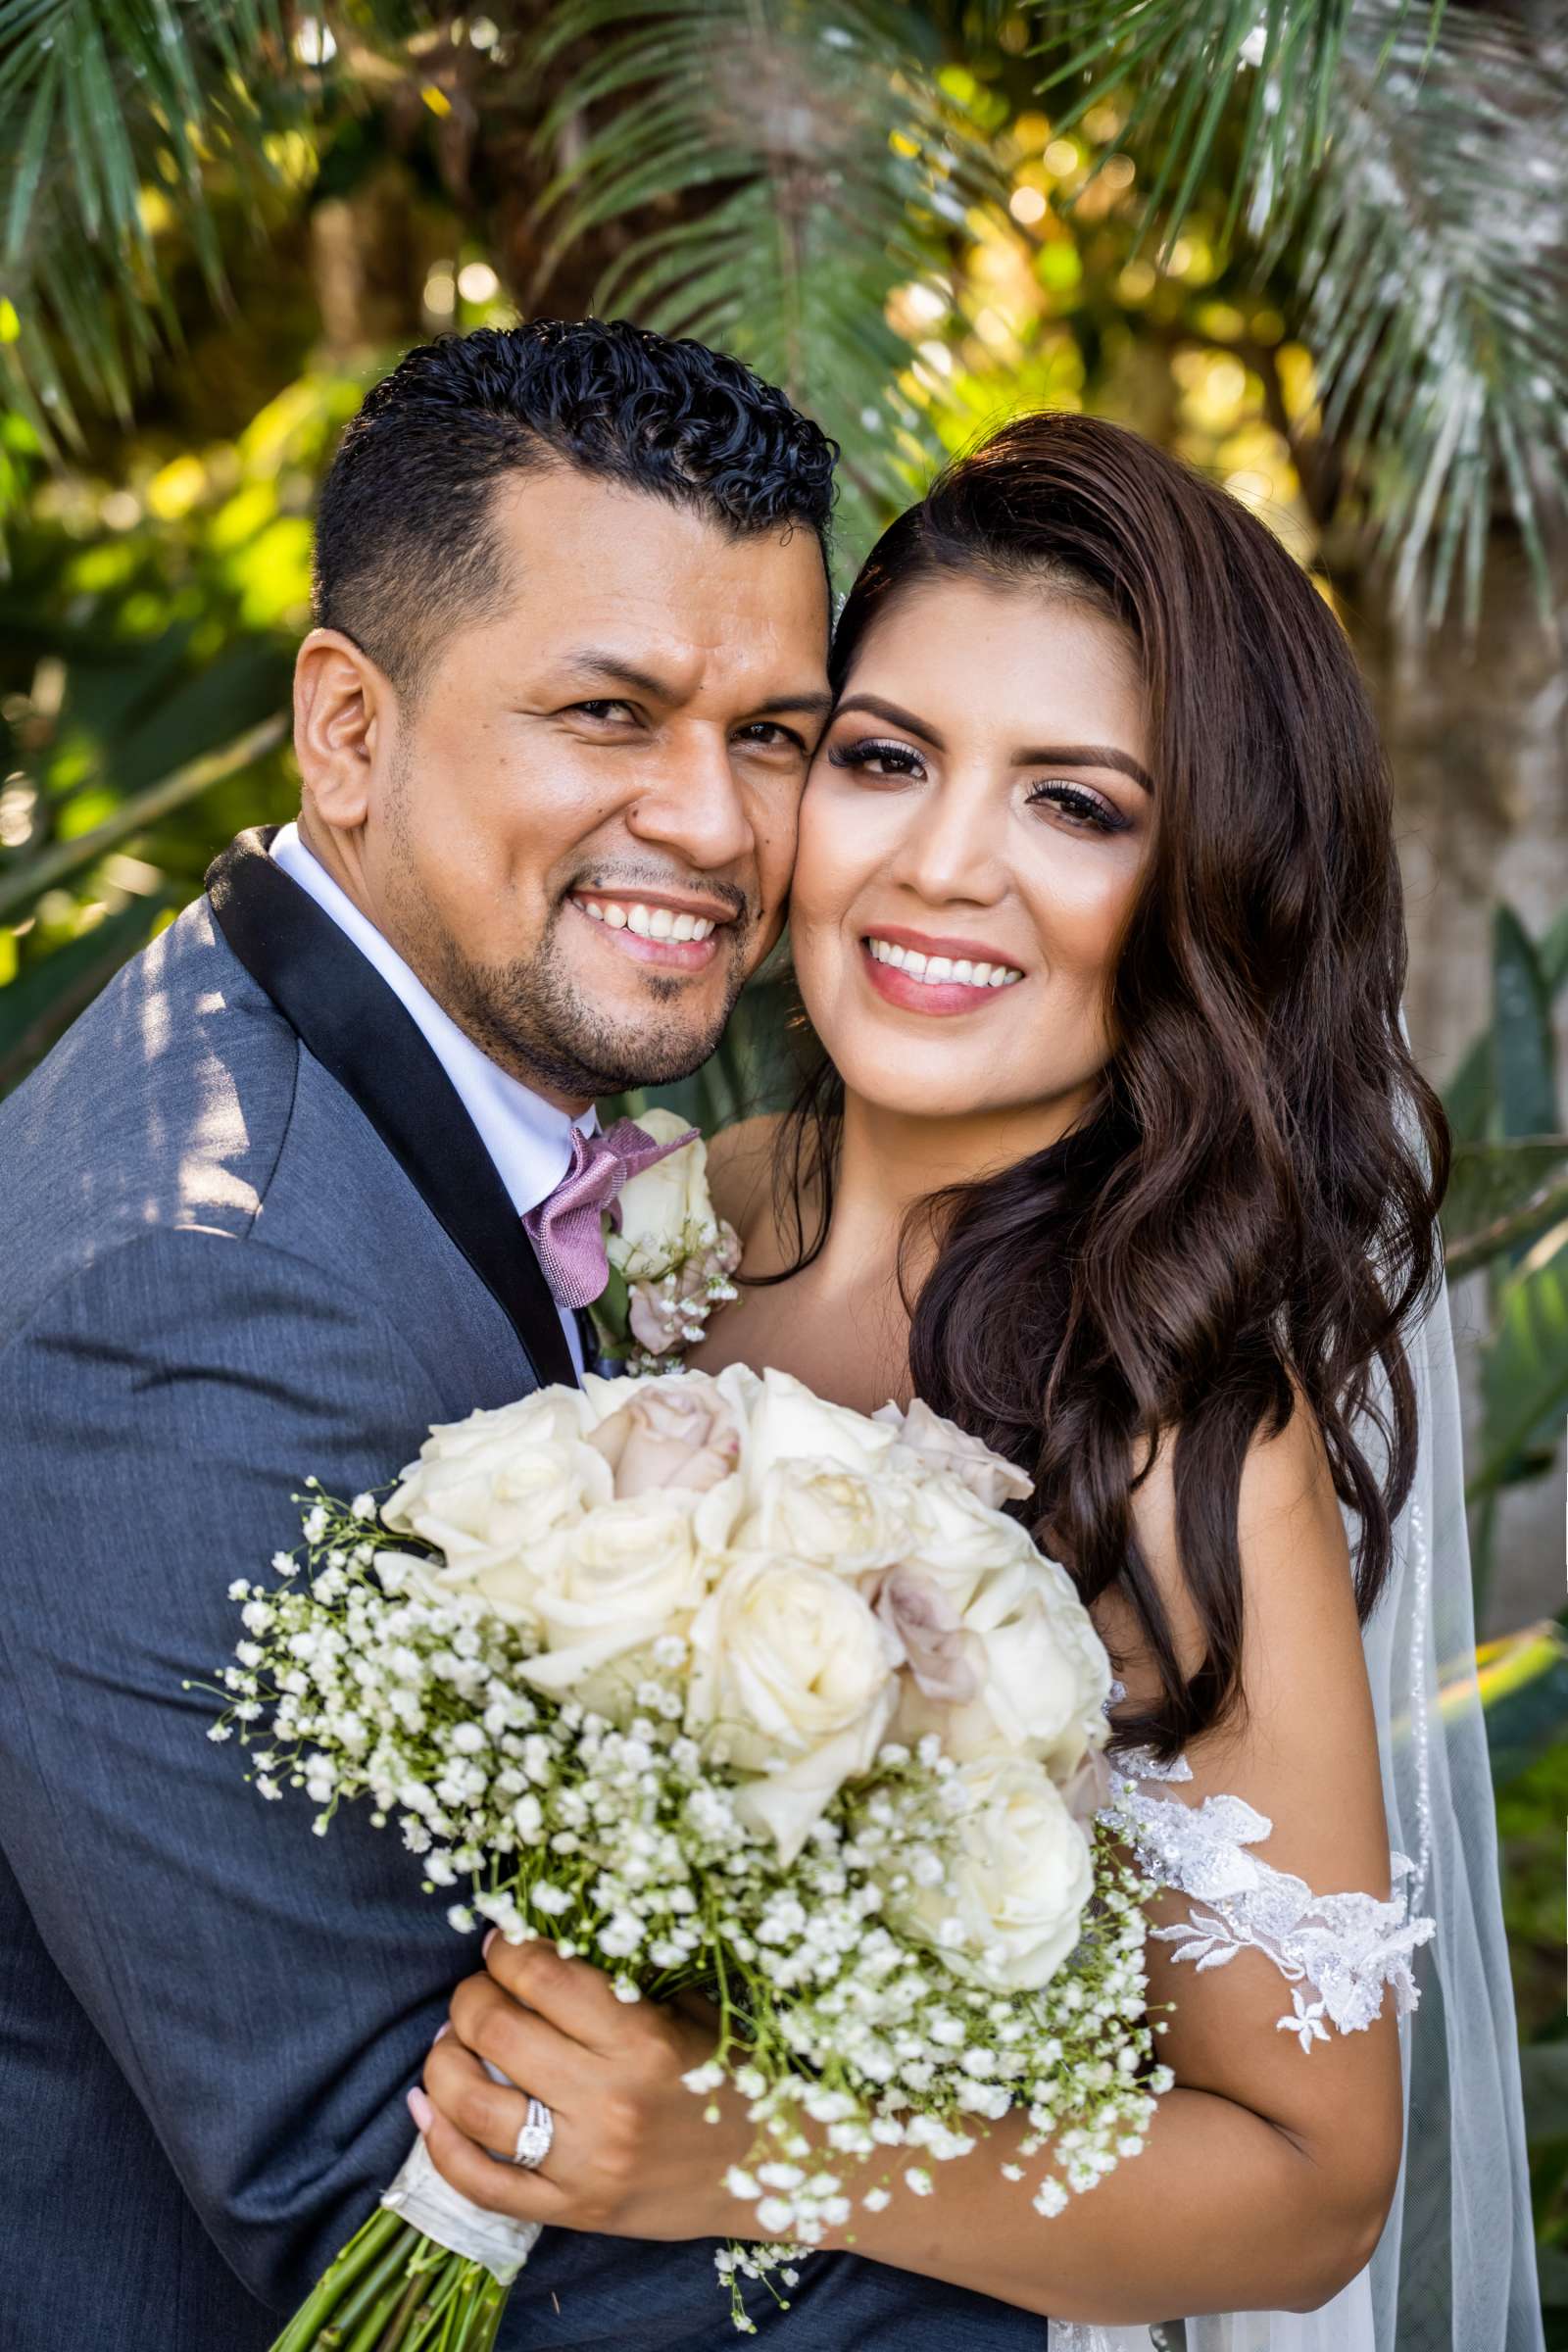 Paradise Point Wedding, Sinthia and Jose Wedding Photo #18 by True Photography